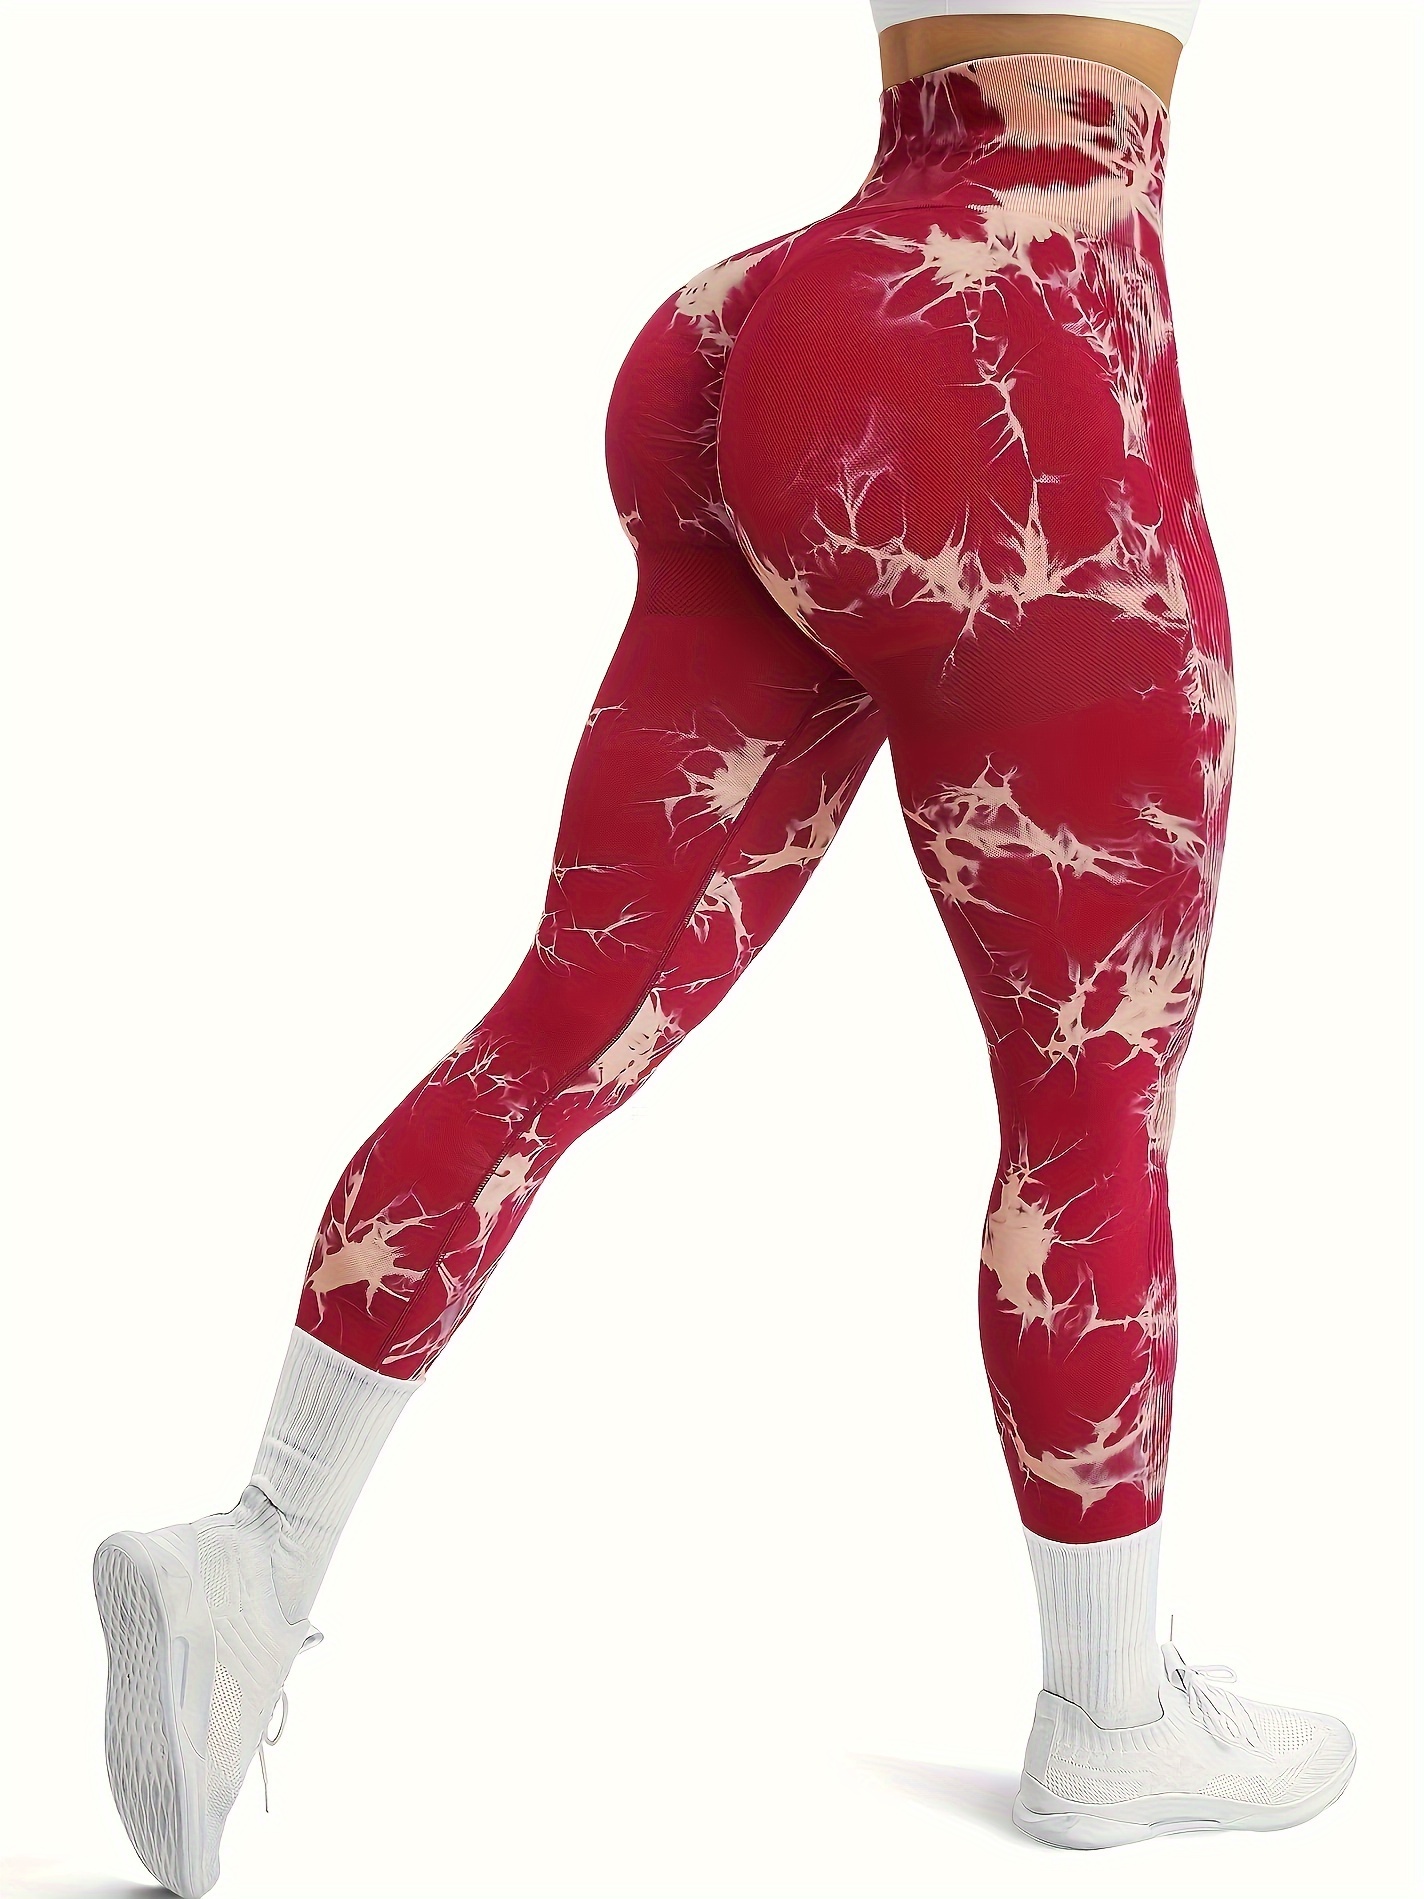 Red Women's Yoga Pants Scrunch Butt Lift Leggings (Bright Red)